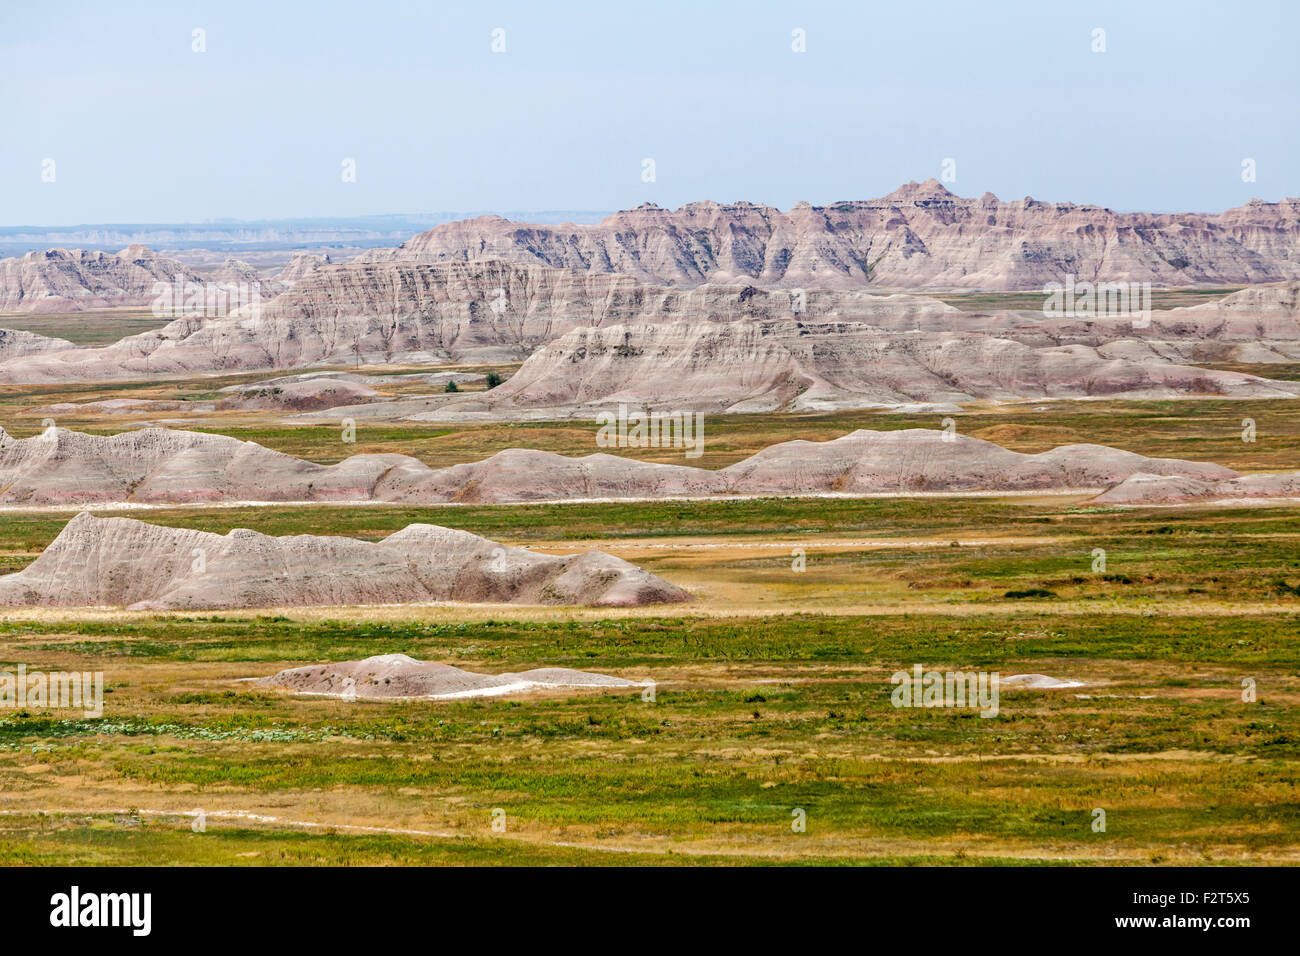 A view of the Badlands National Park, South Dakota. Stock Photo